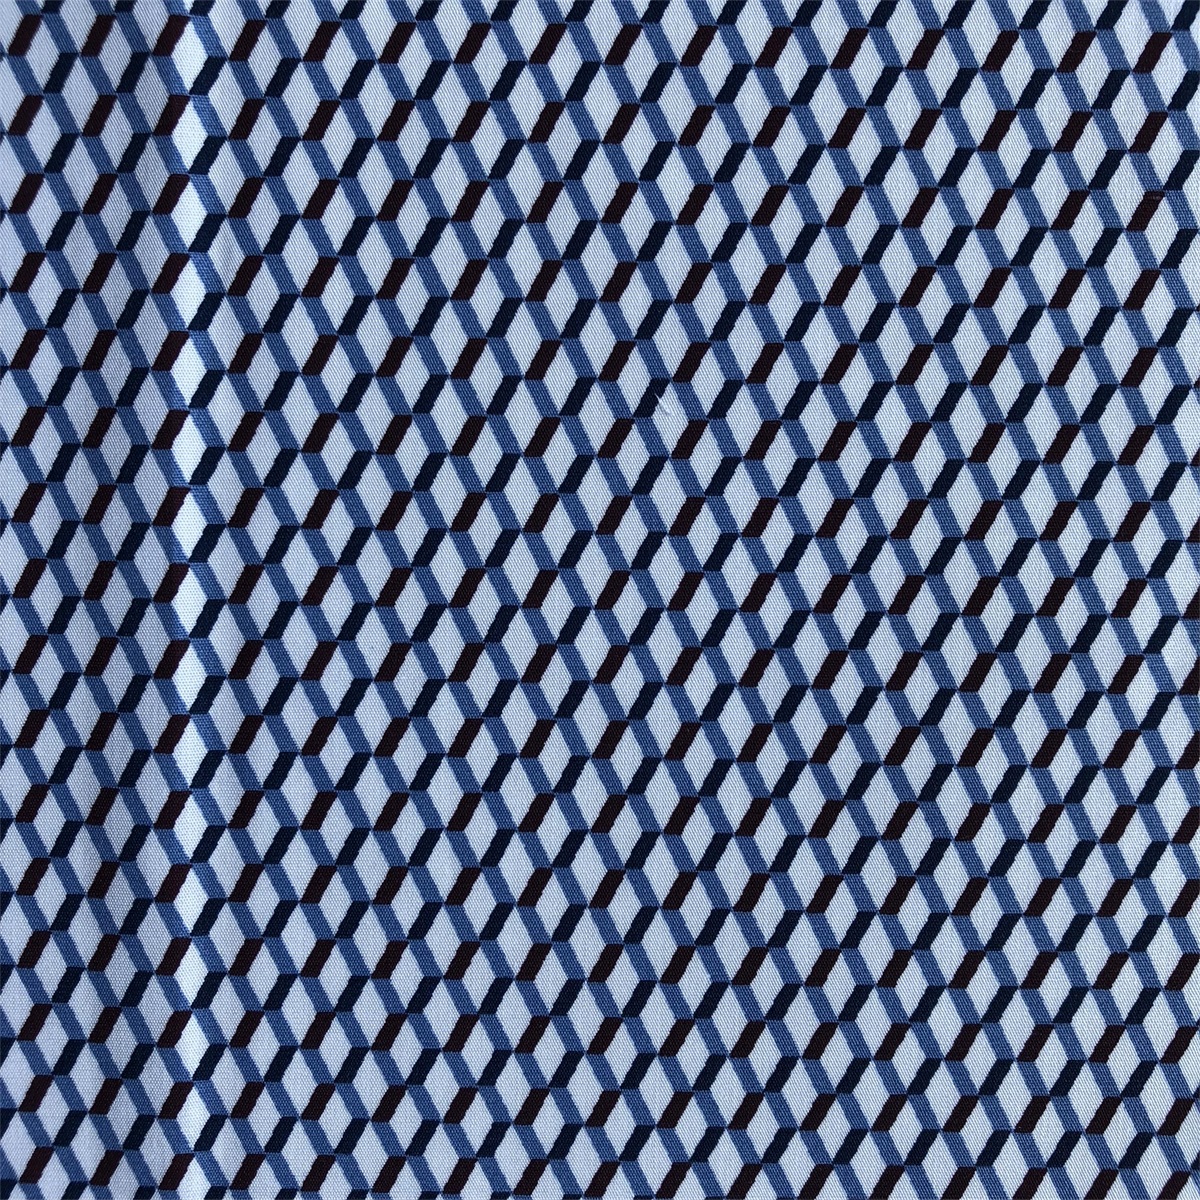 Sun-rising Textile Cotton Printed fabric fashion design soft comfortable 100% cotton poplin printed fabric for men's shirts